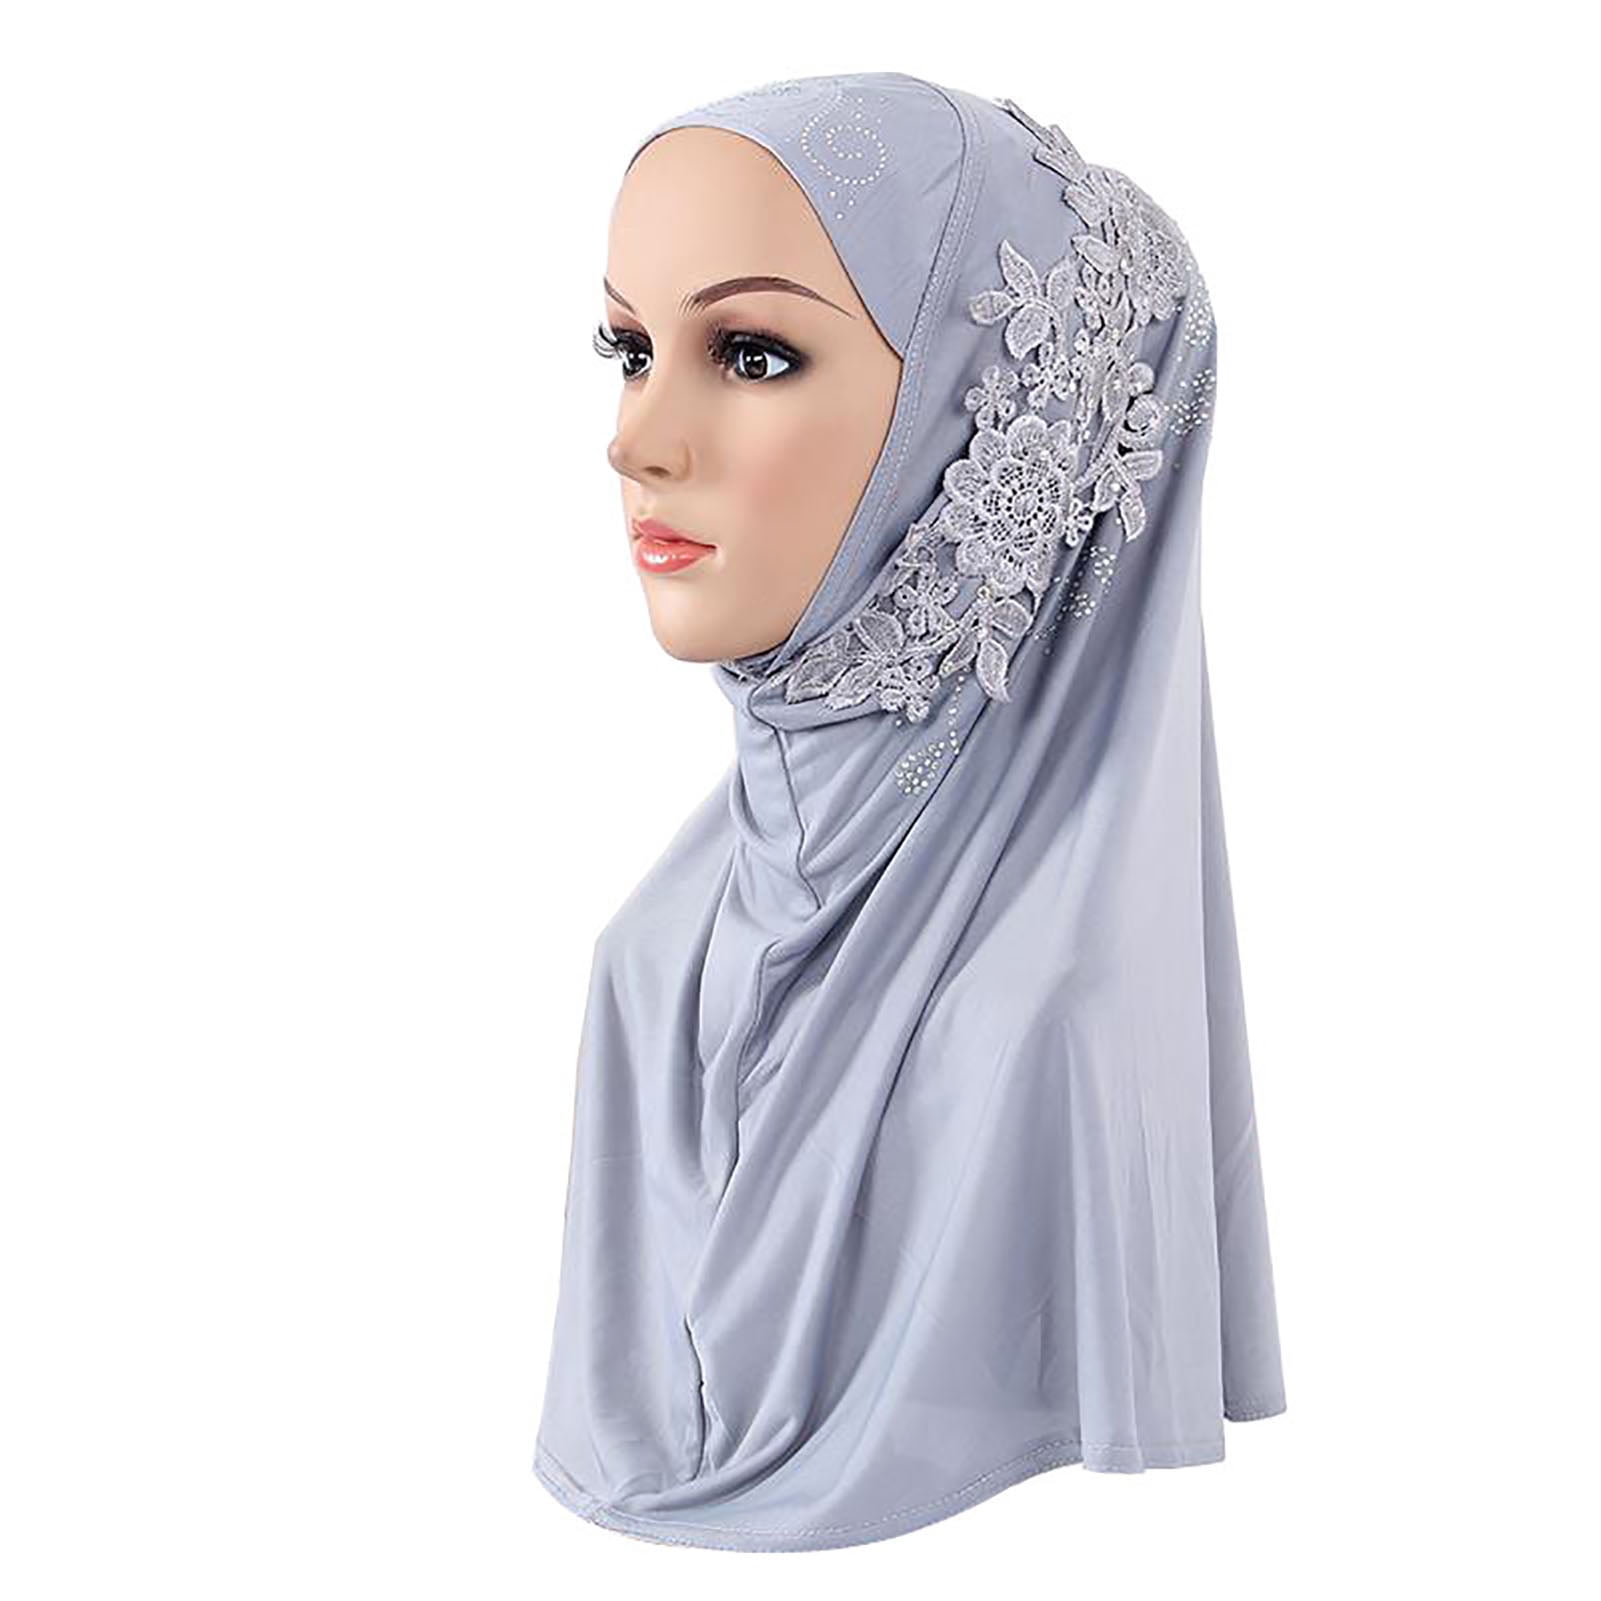 Chiffon Maxi Hijab Muslim Headcover décor with Rhinestone and Beads 